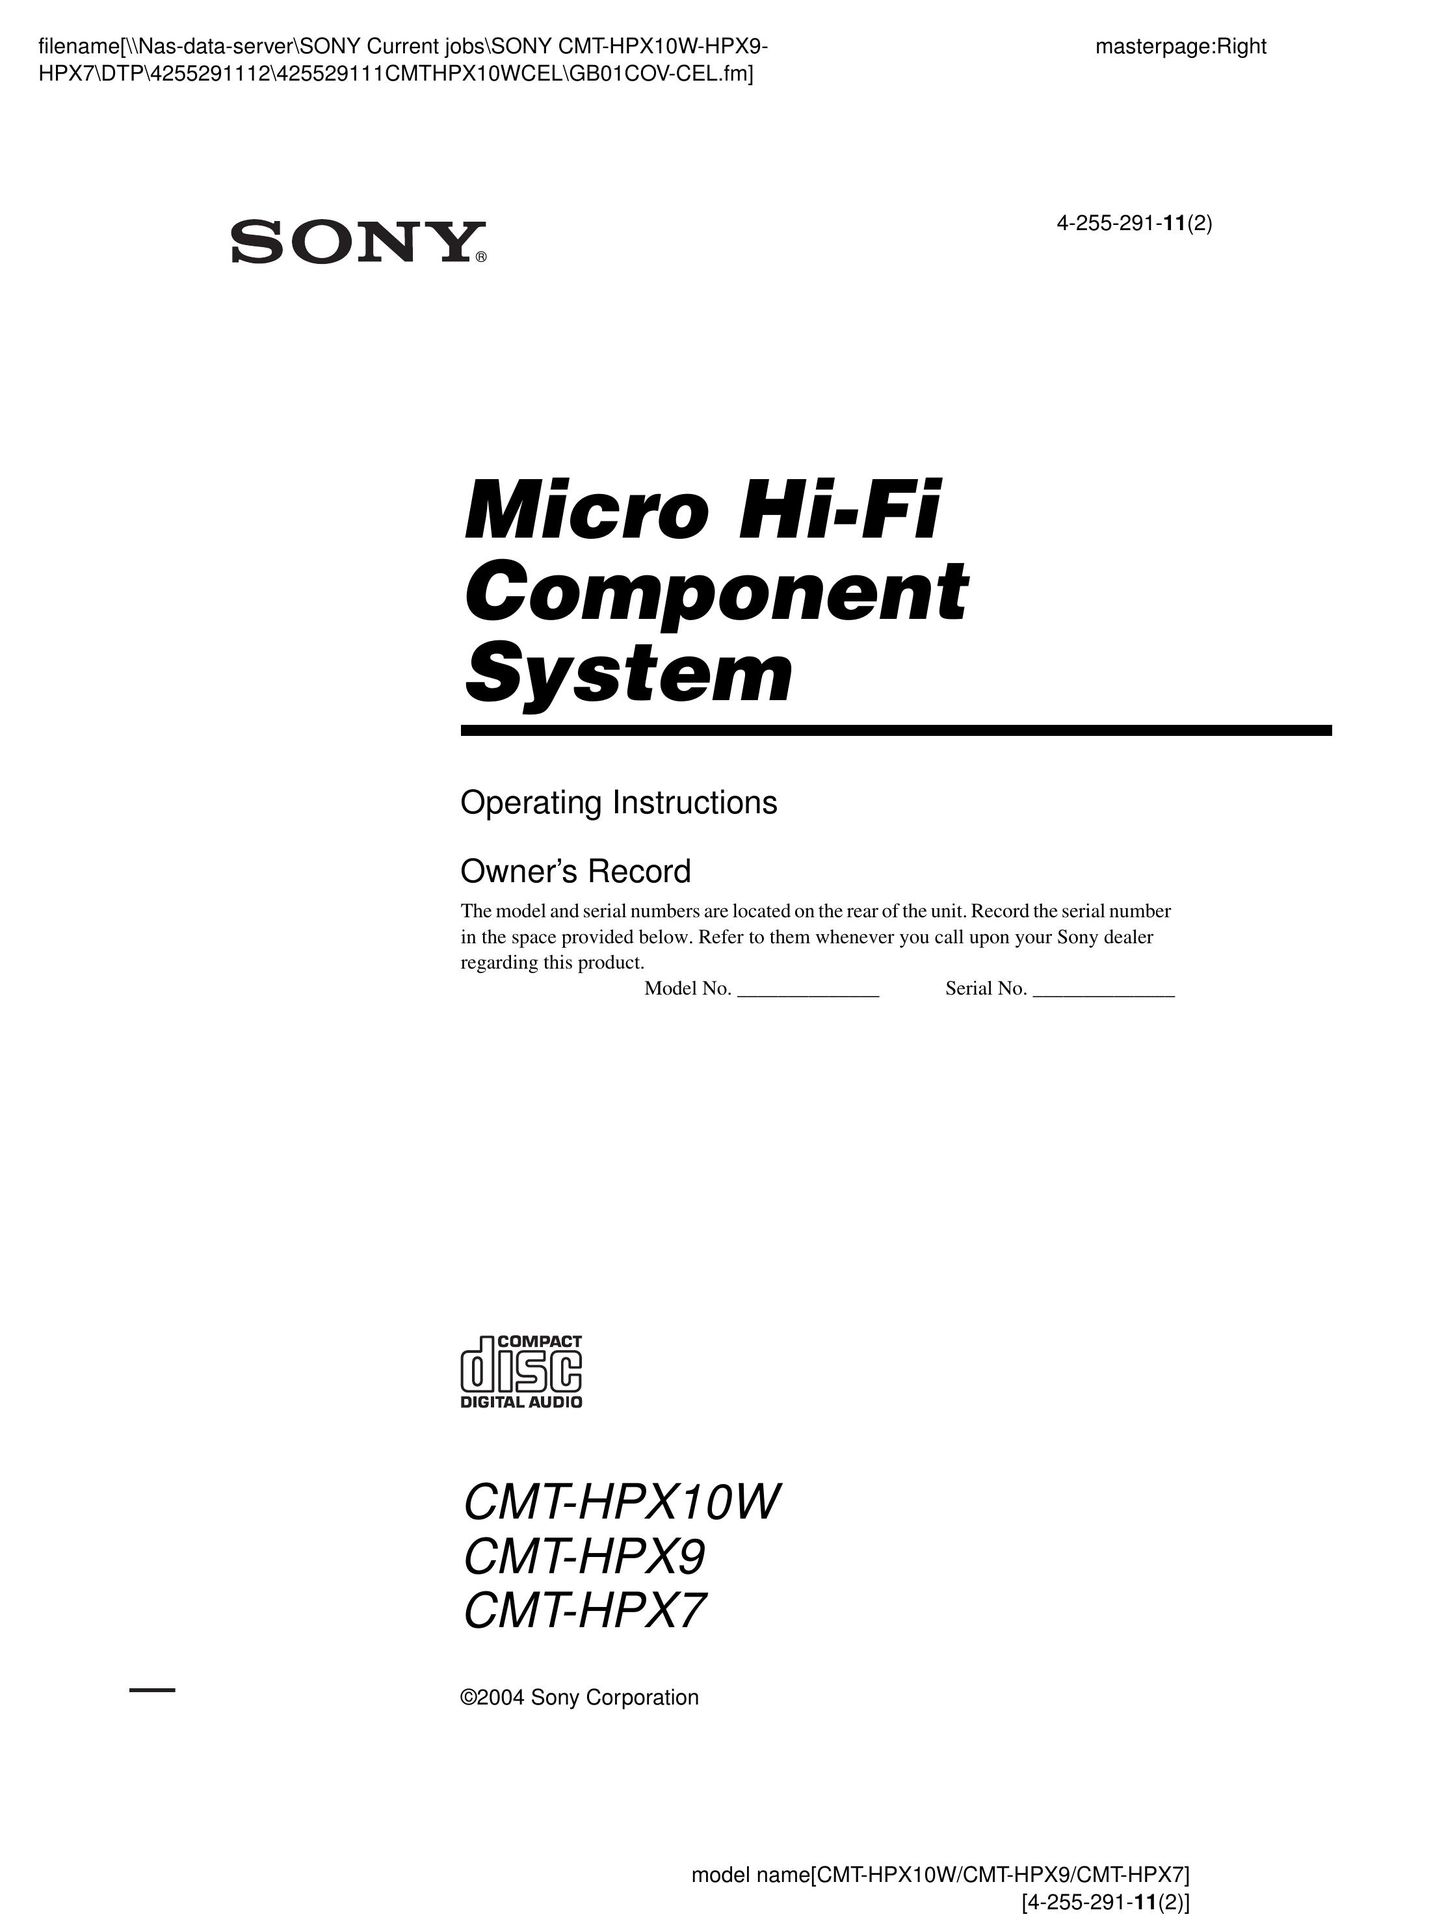 Sony CMT-HPX10W Speaker System User Manual